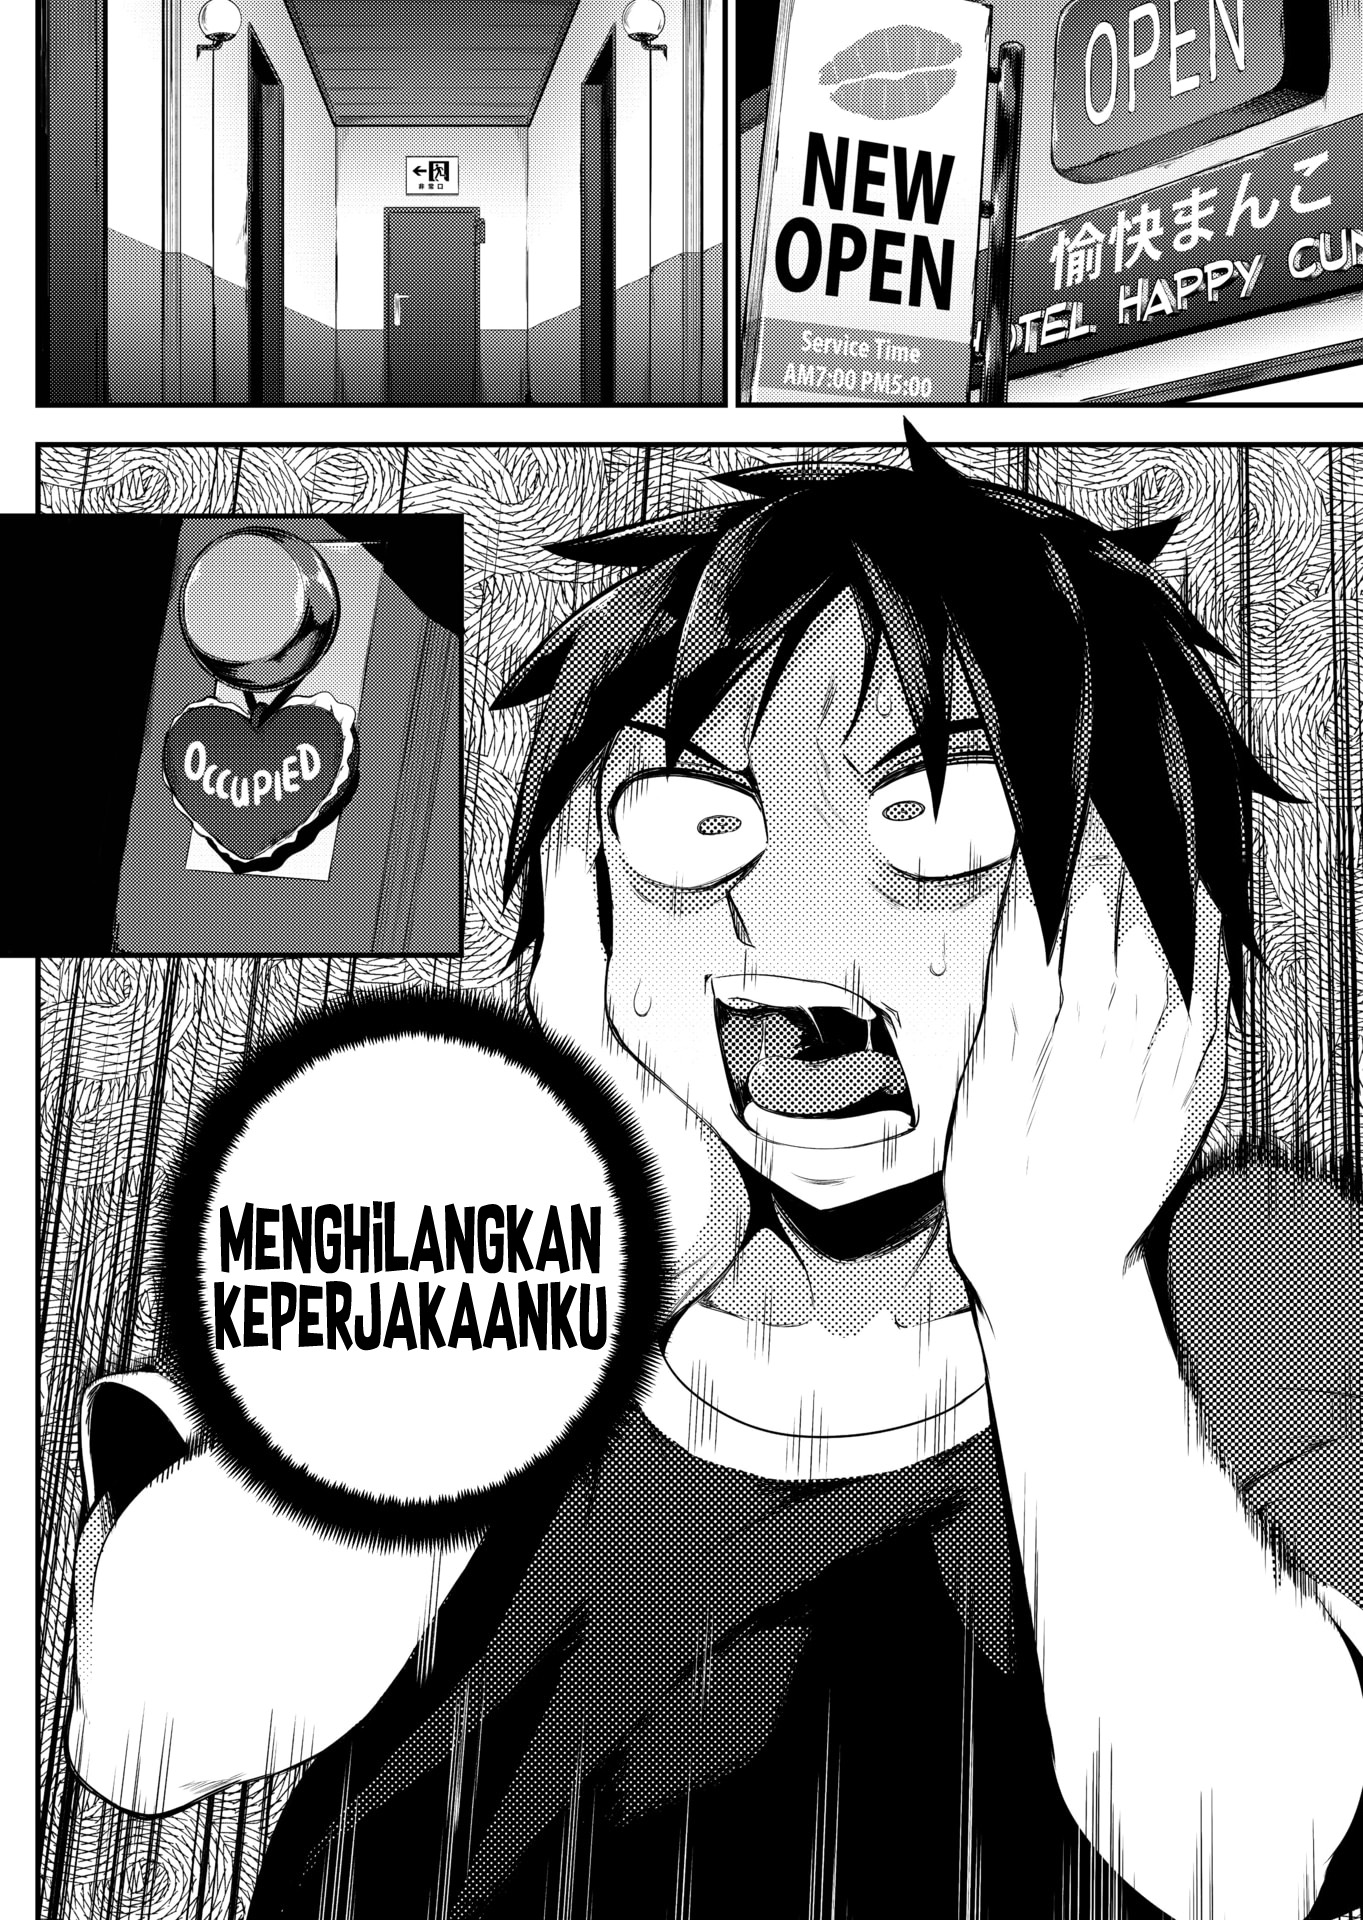 read manga free indonesia vpn